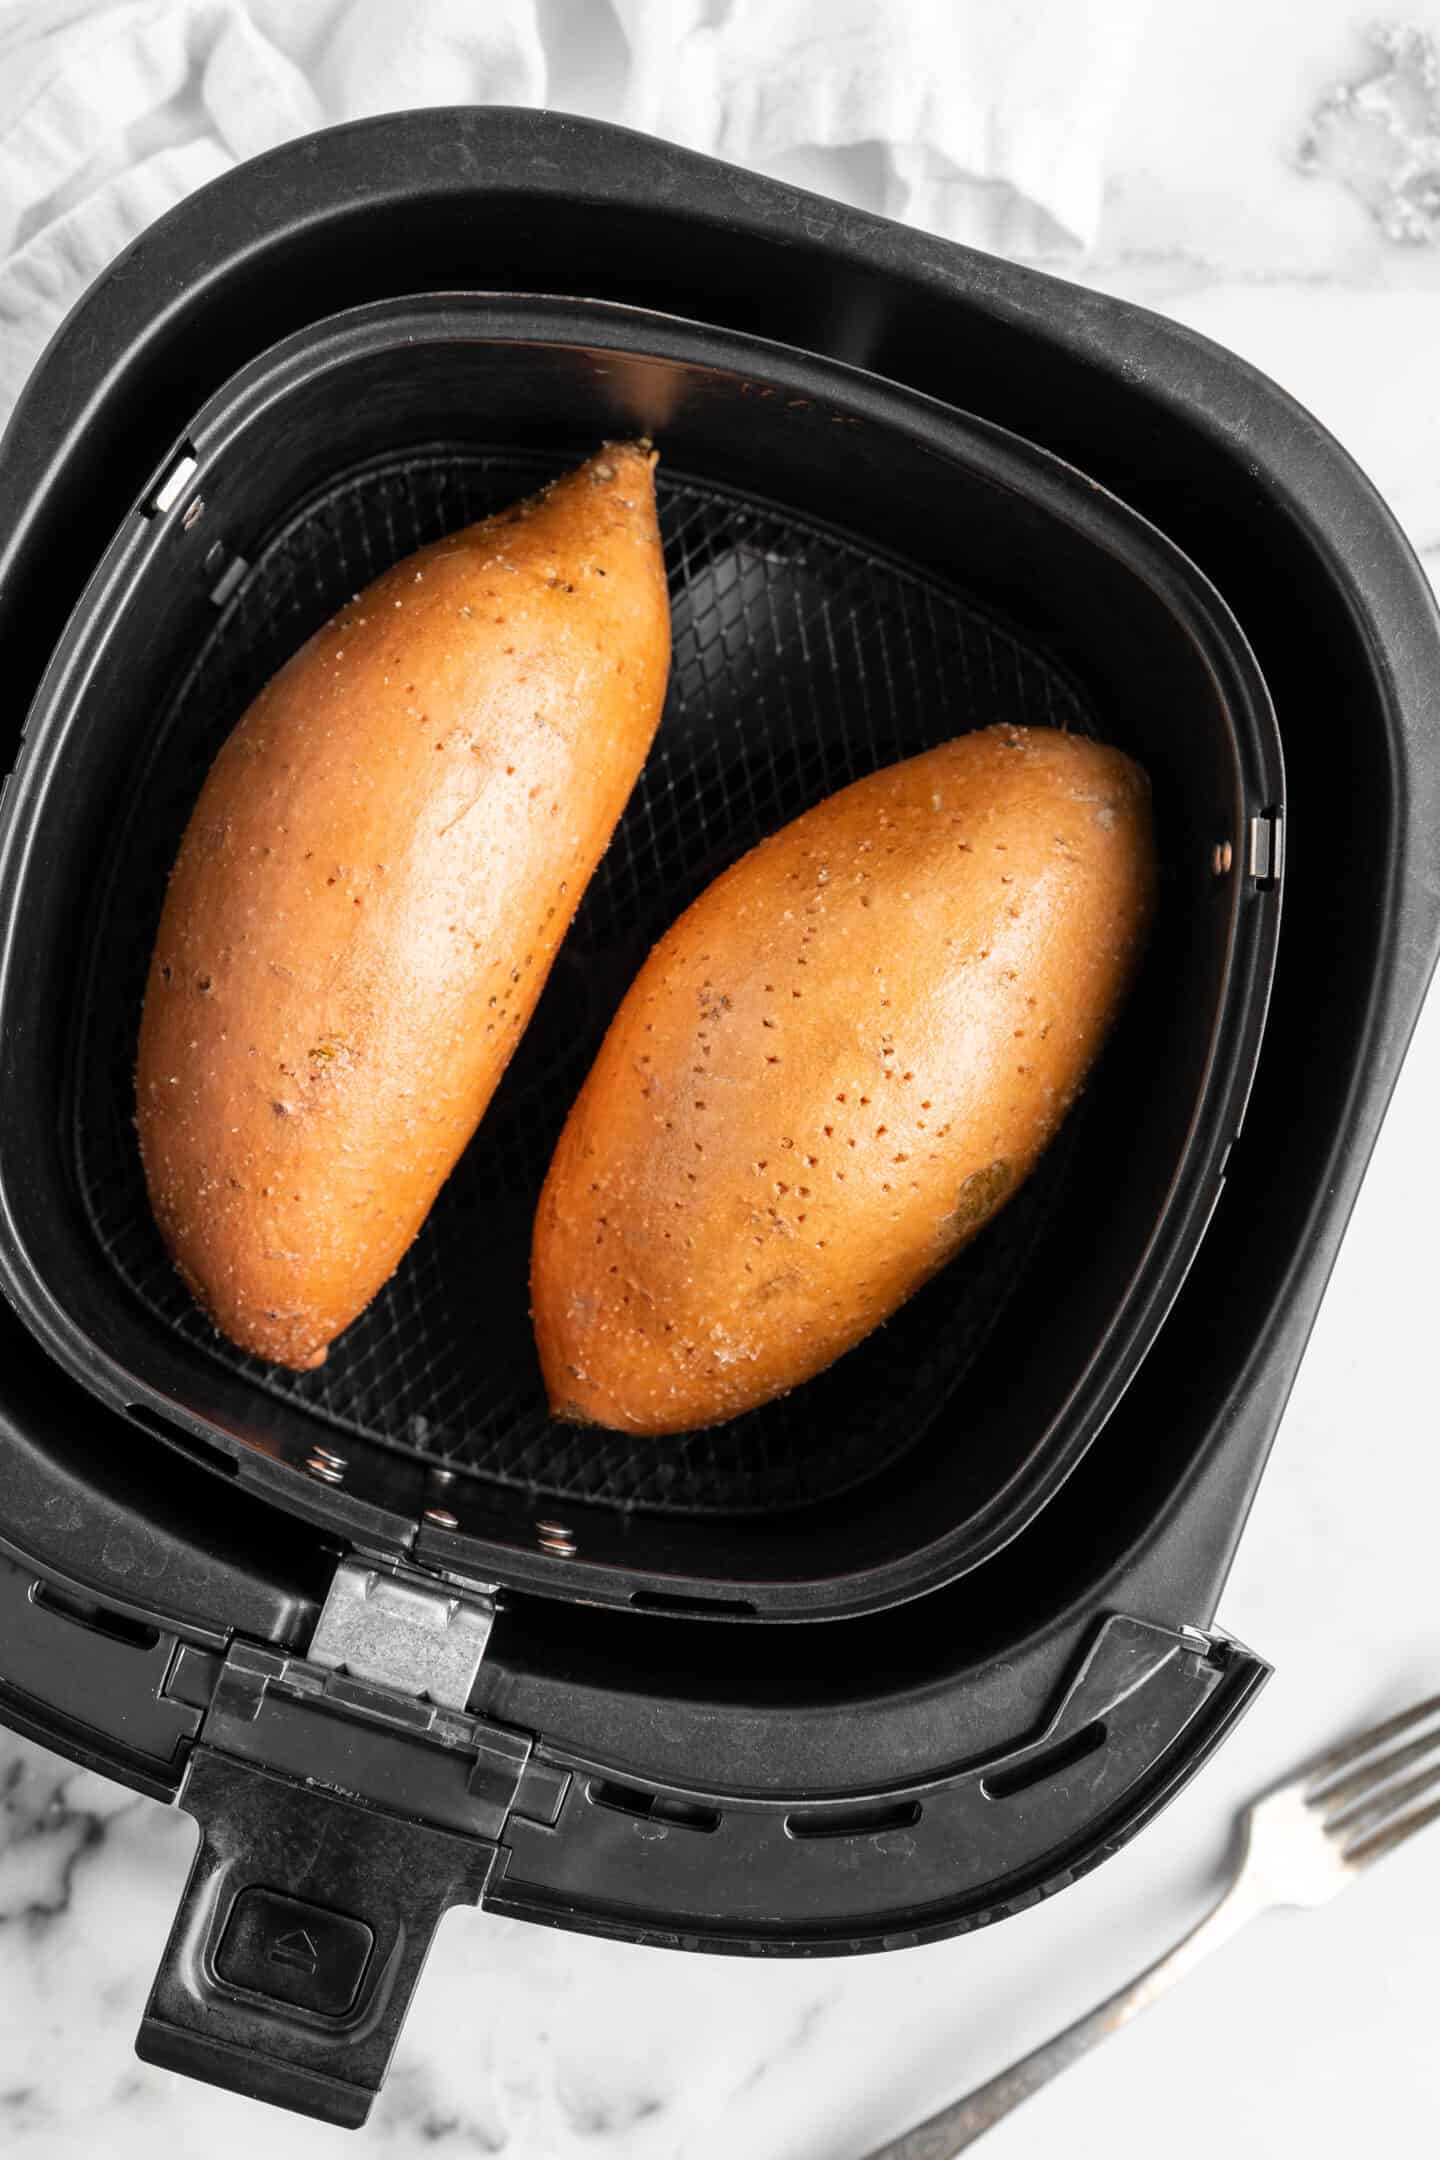 Two sweet potatoes in air fryer